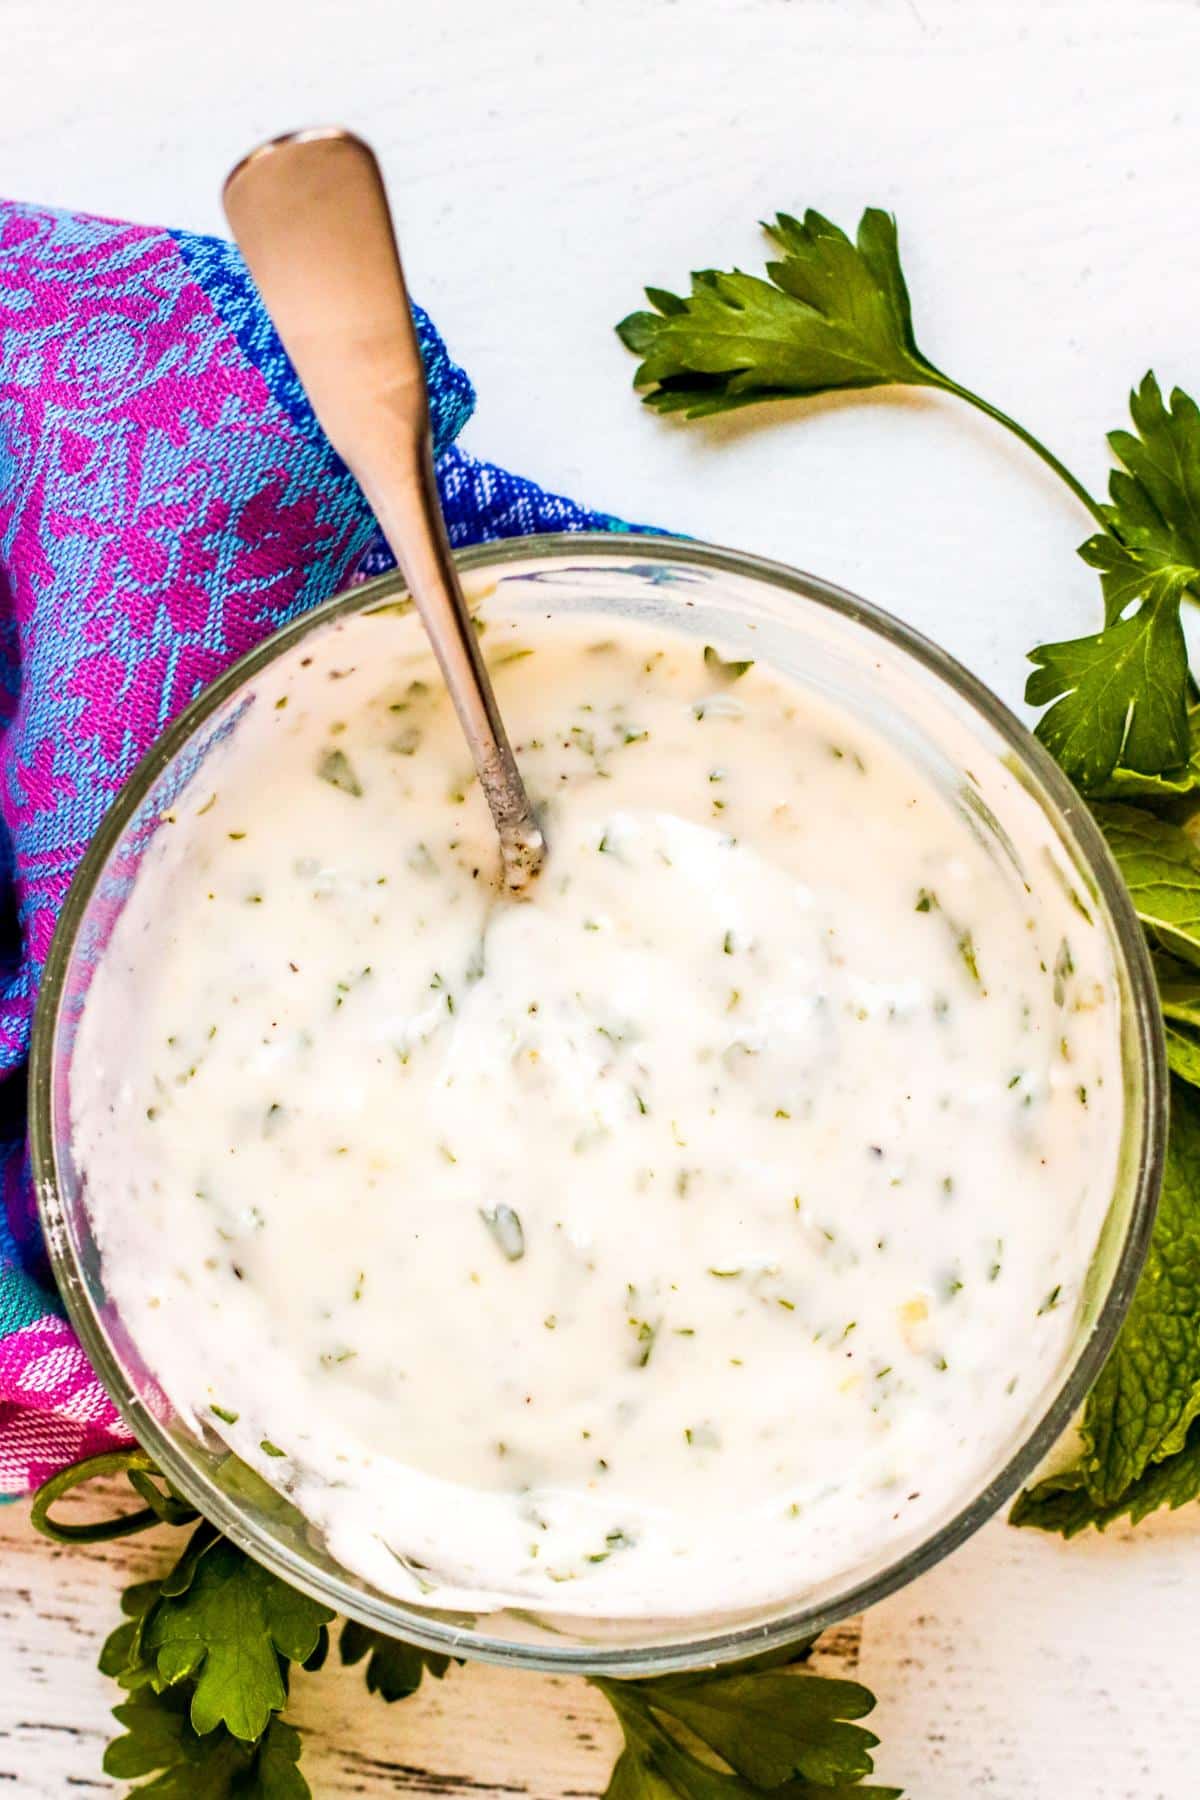 Homemade yogurt sauce with garlic and herbs